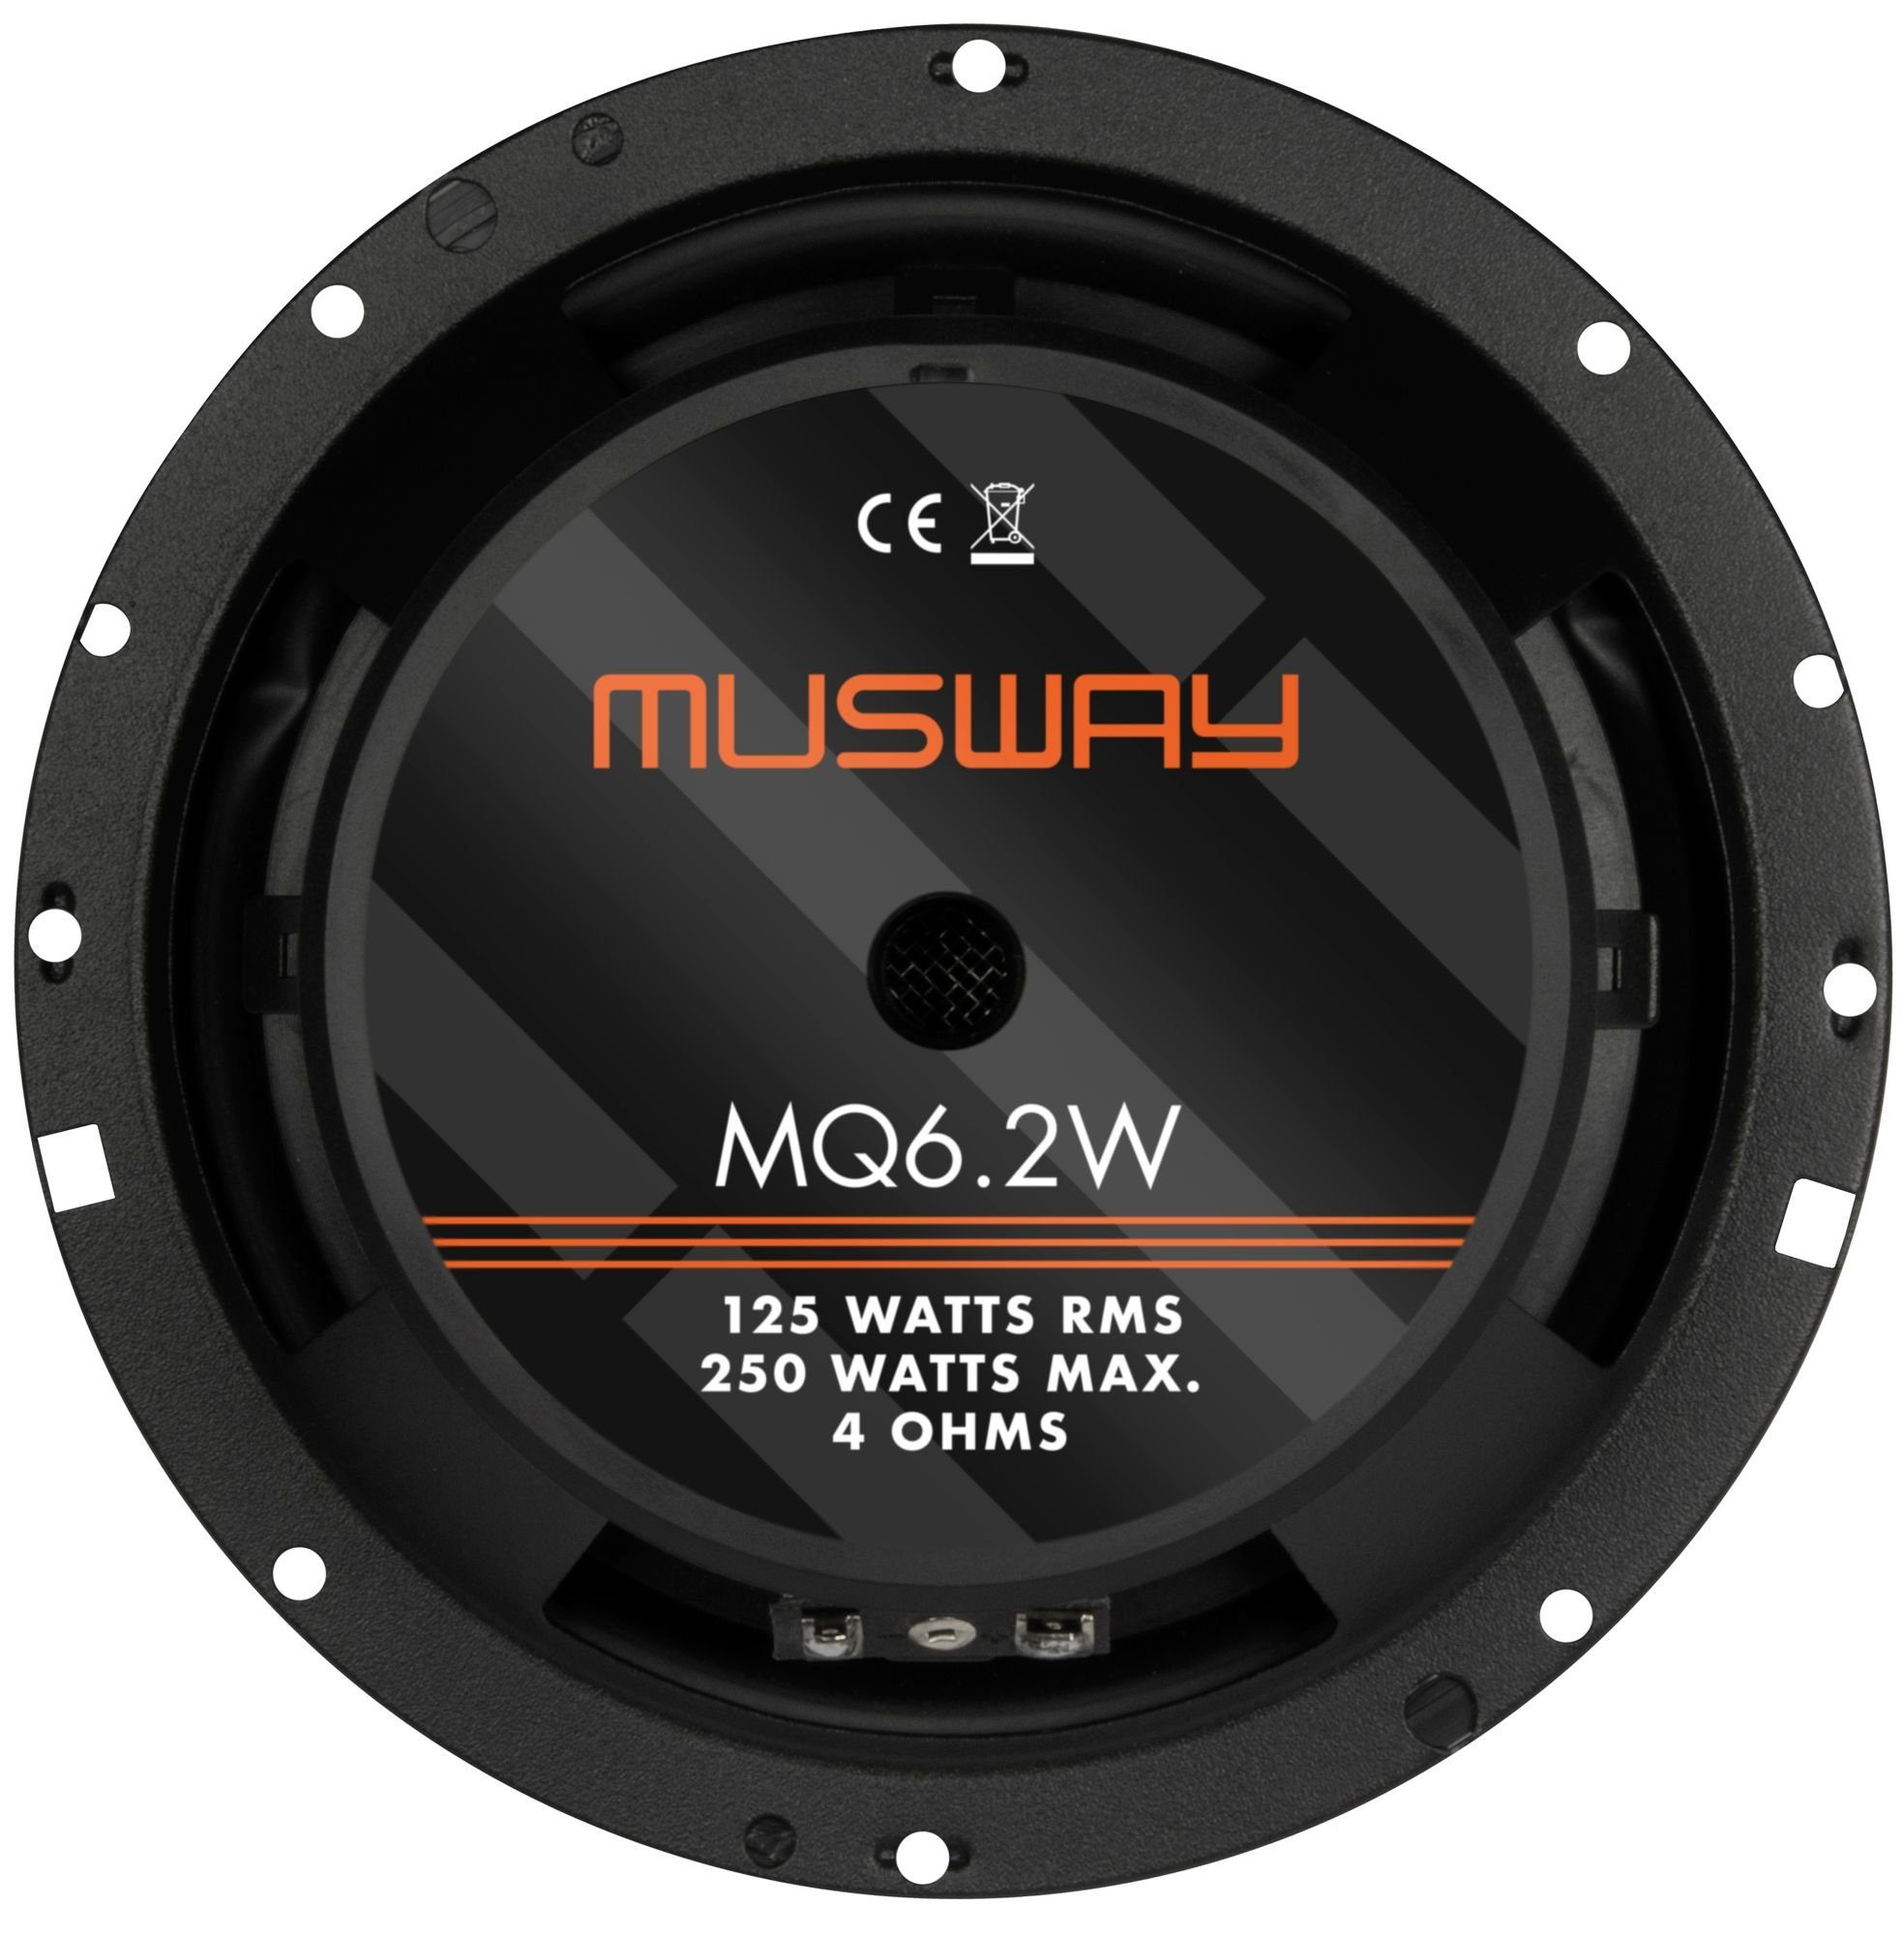 Kickbass MQ6.2W (Musway Musway Lautsprecher - Lautsprecher Kickbass) - MQ6.2W Musway Auto-Lautsprecher 16,5cm 16,5cm